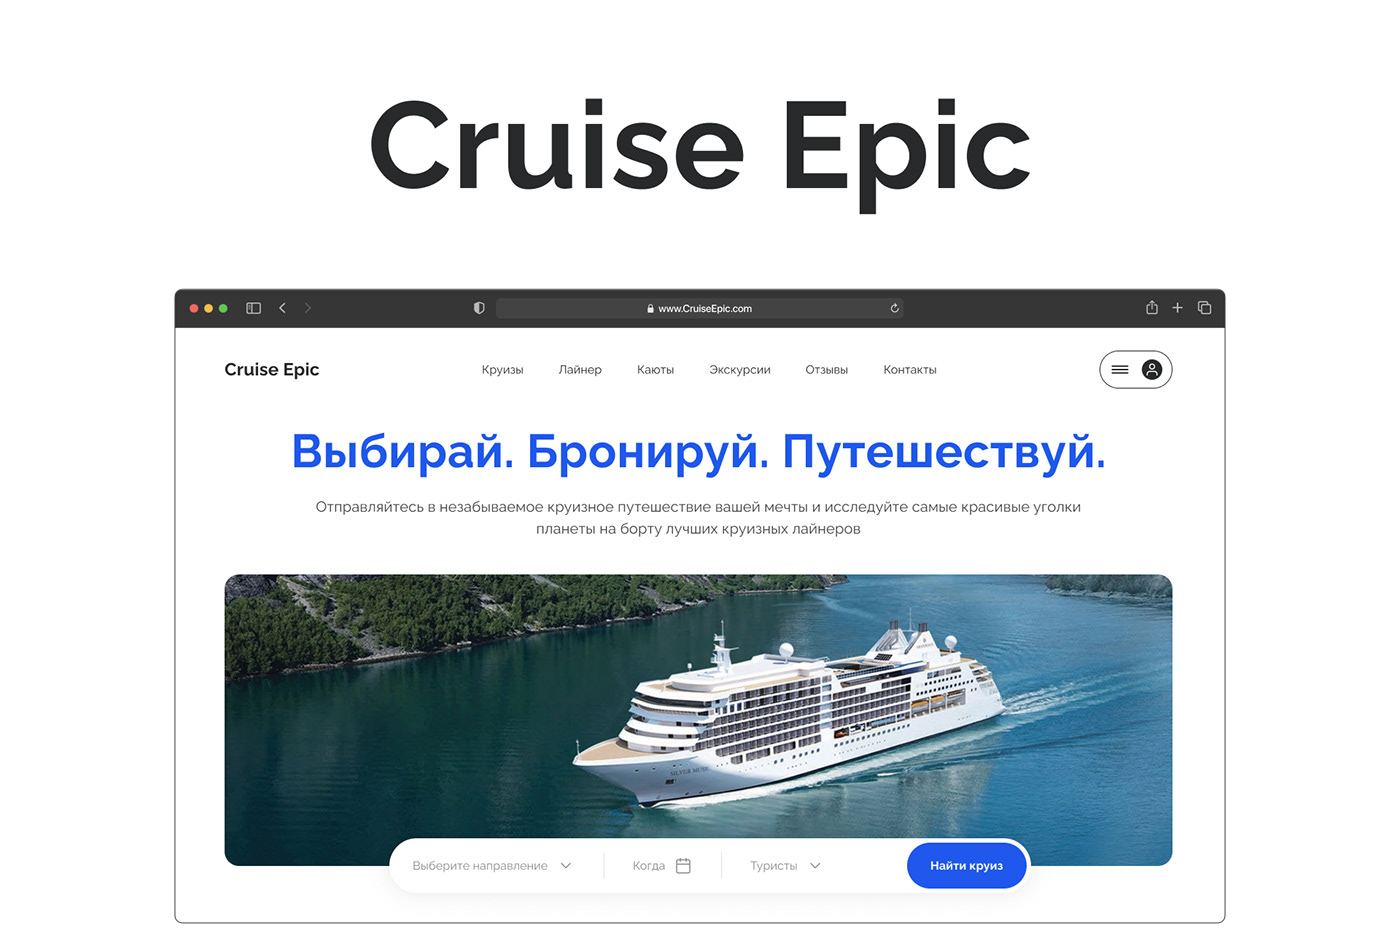 cruise cruise ship cruise trip liner Travel Cruises tourism sea round-the-world trip sea voyage